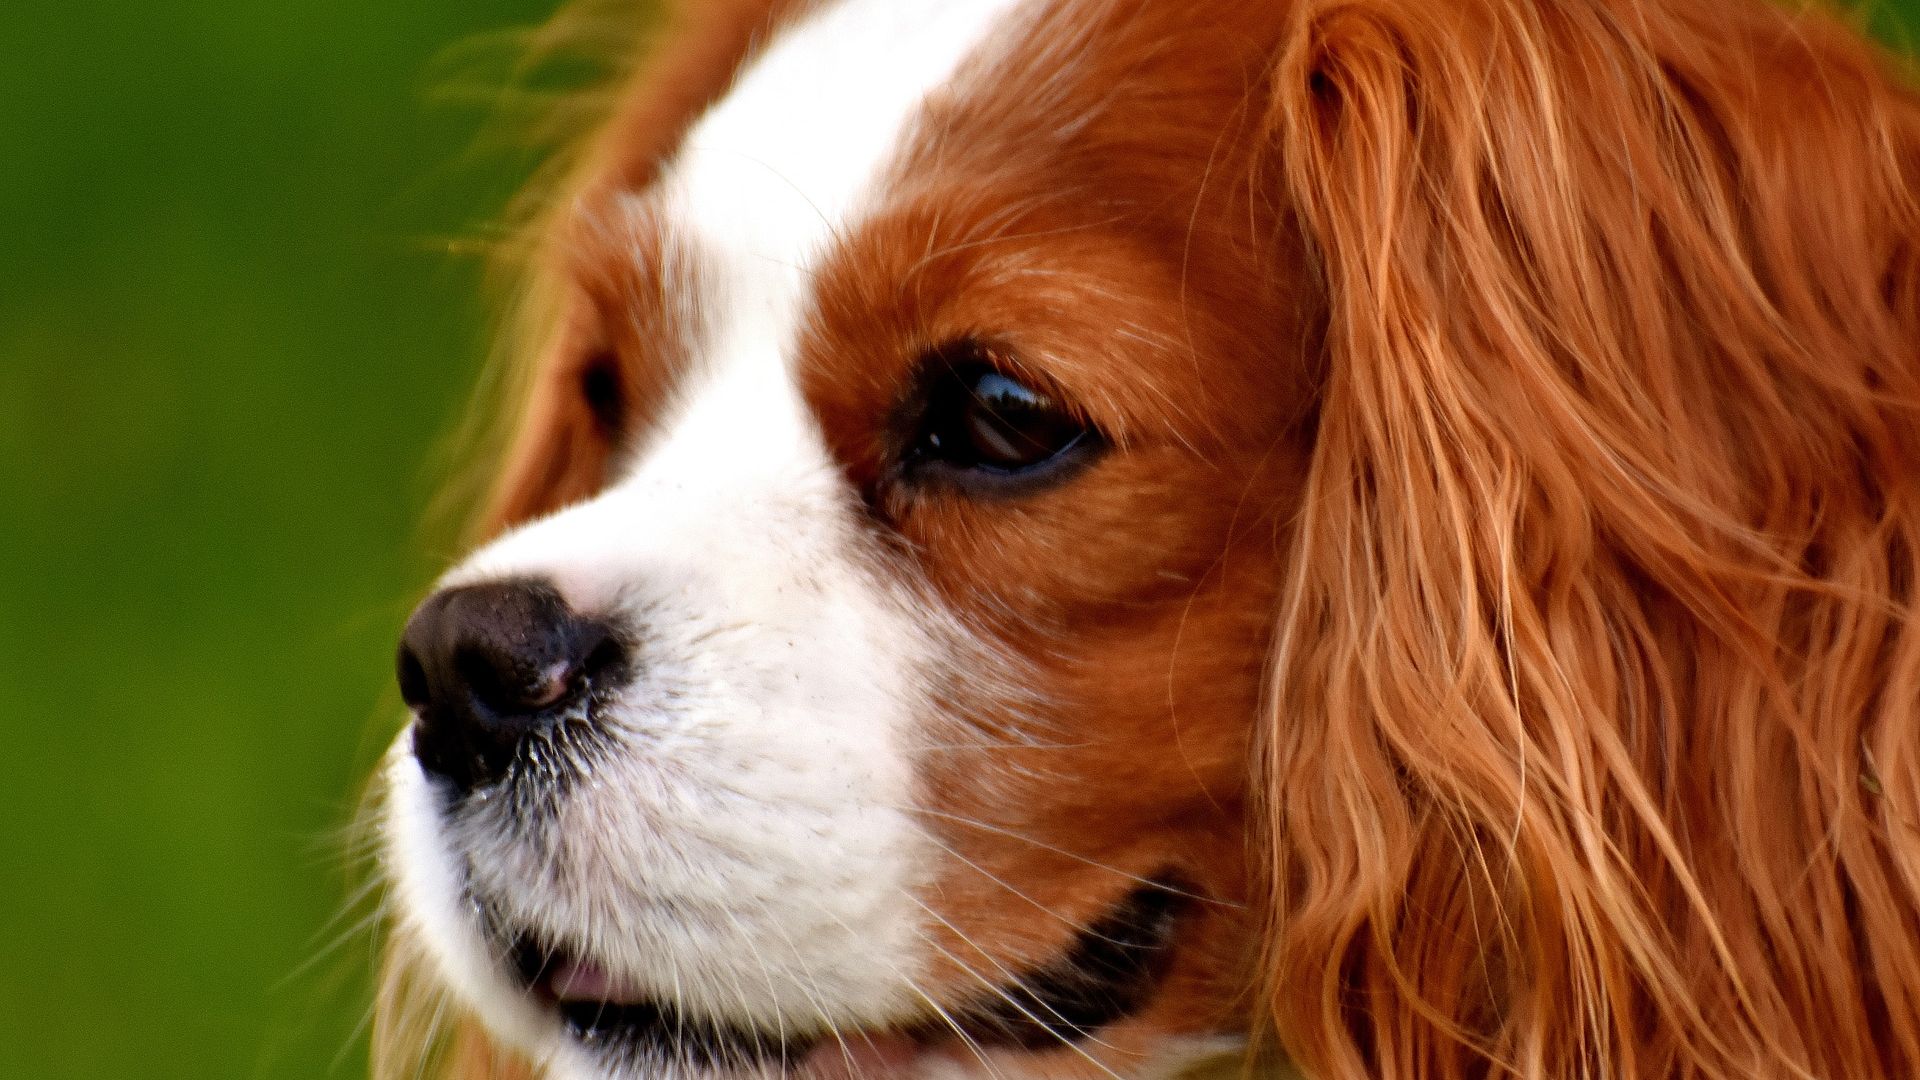 Wallpaper Cavalier King Charles Spaniel, cute dog, muzzle